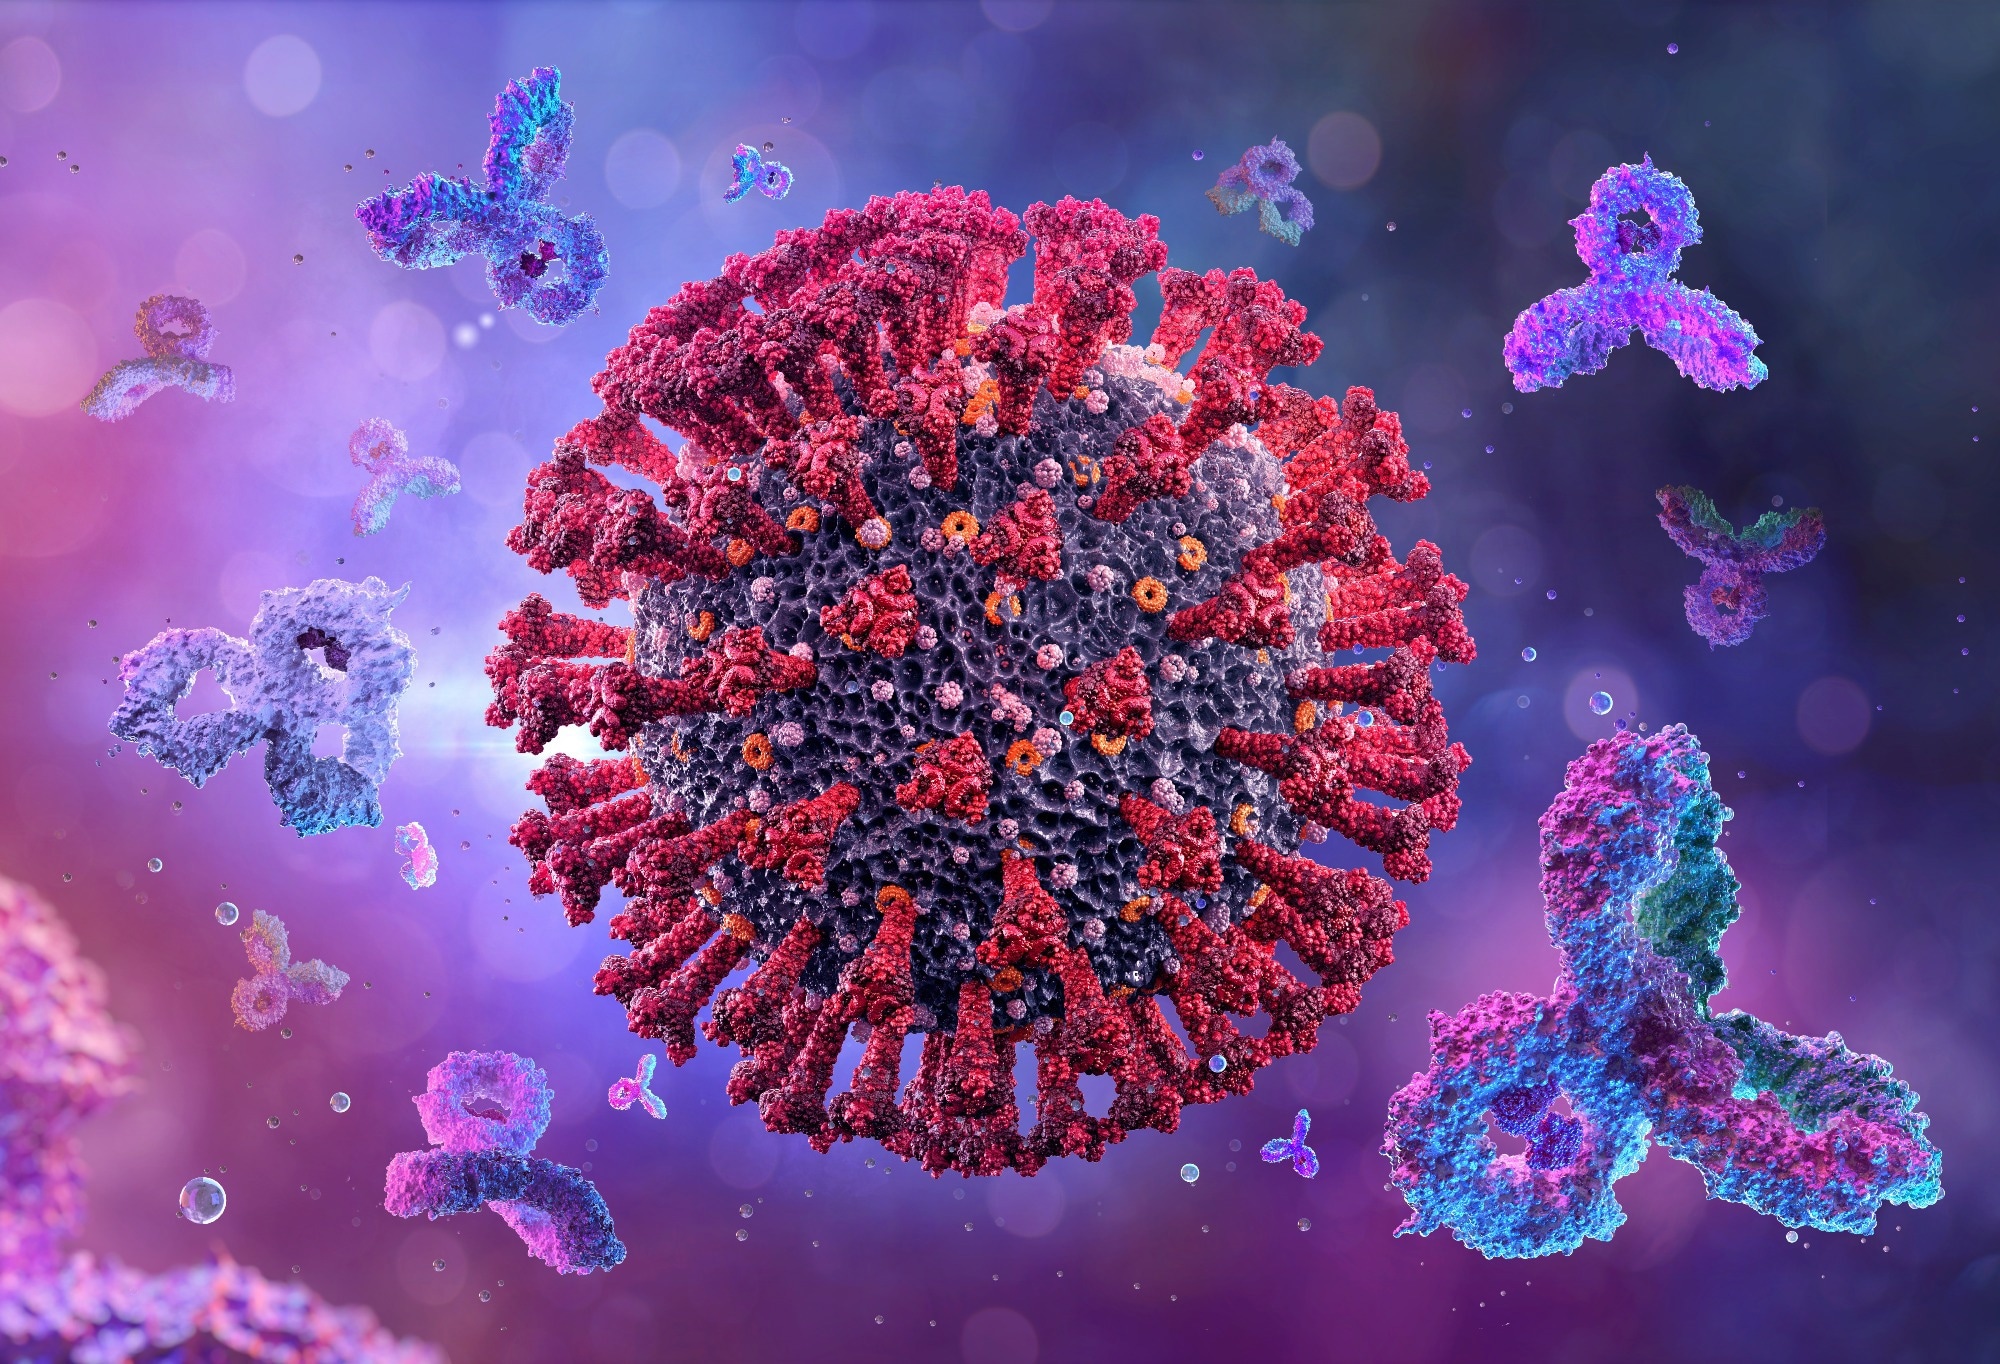 Study: Host-microbe multiomic profiling reveals age-dependent immune dysregulation associated with COVID-19 immunopathology. Image Credit: Corona Borealis Studio / Shutterstock